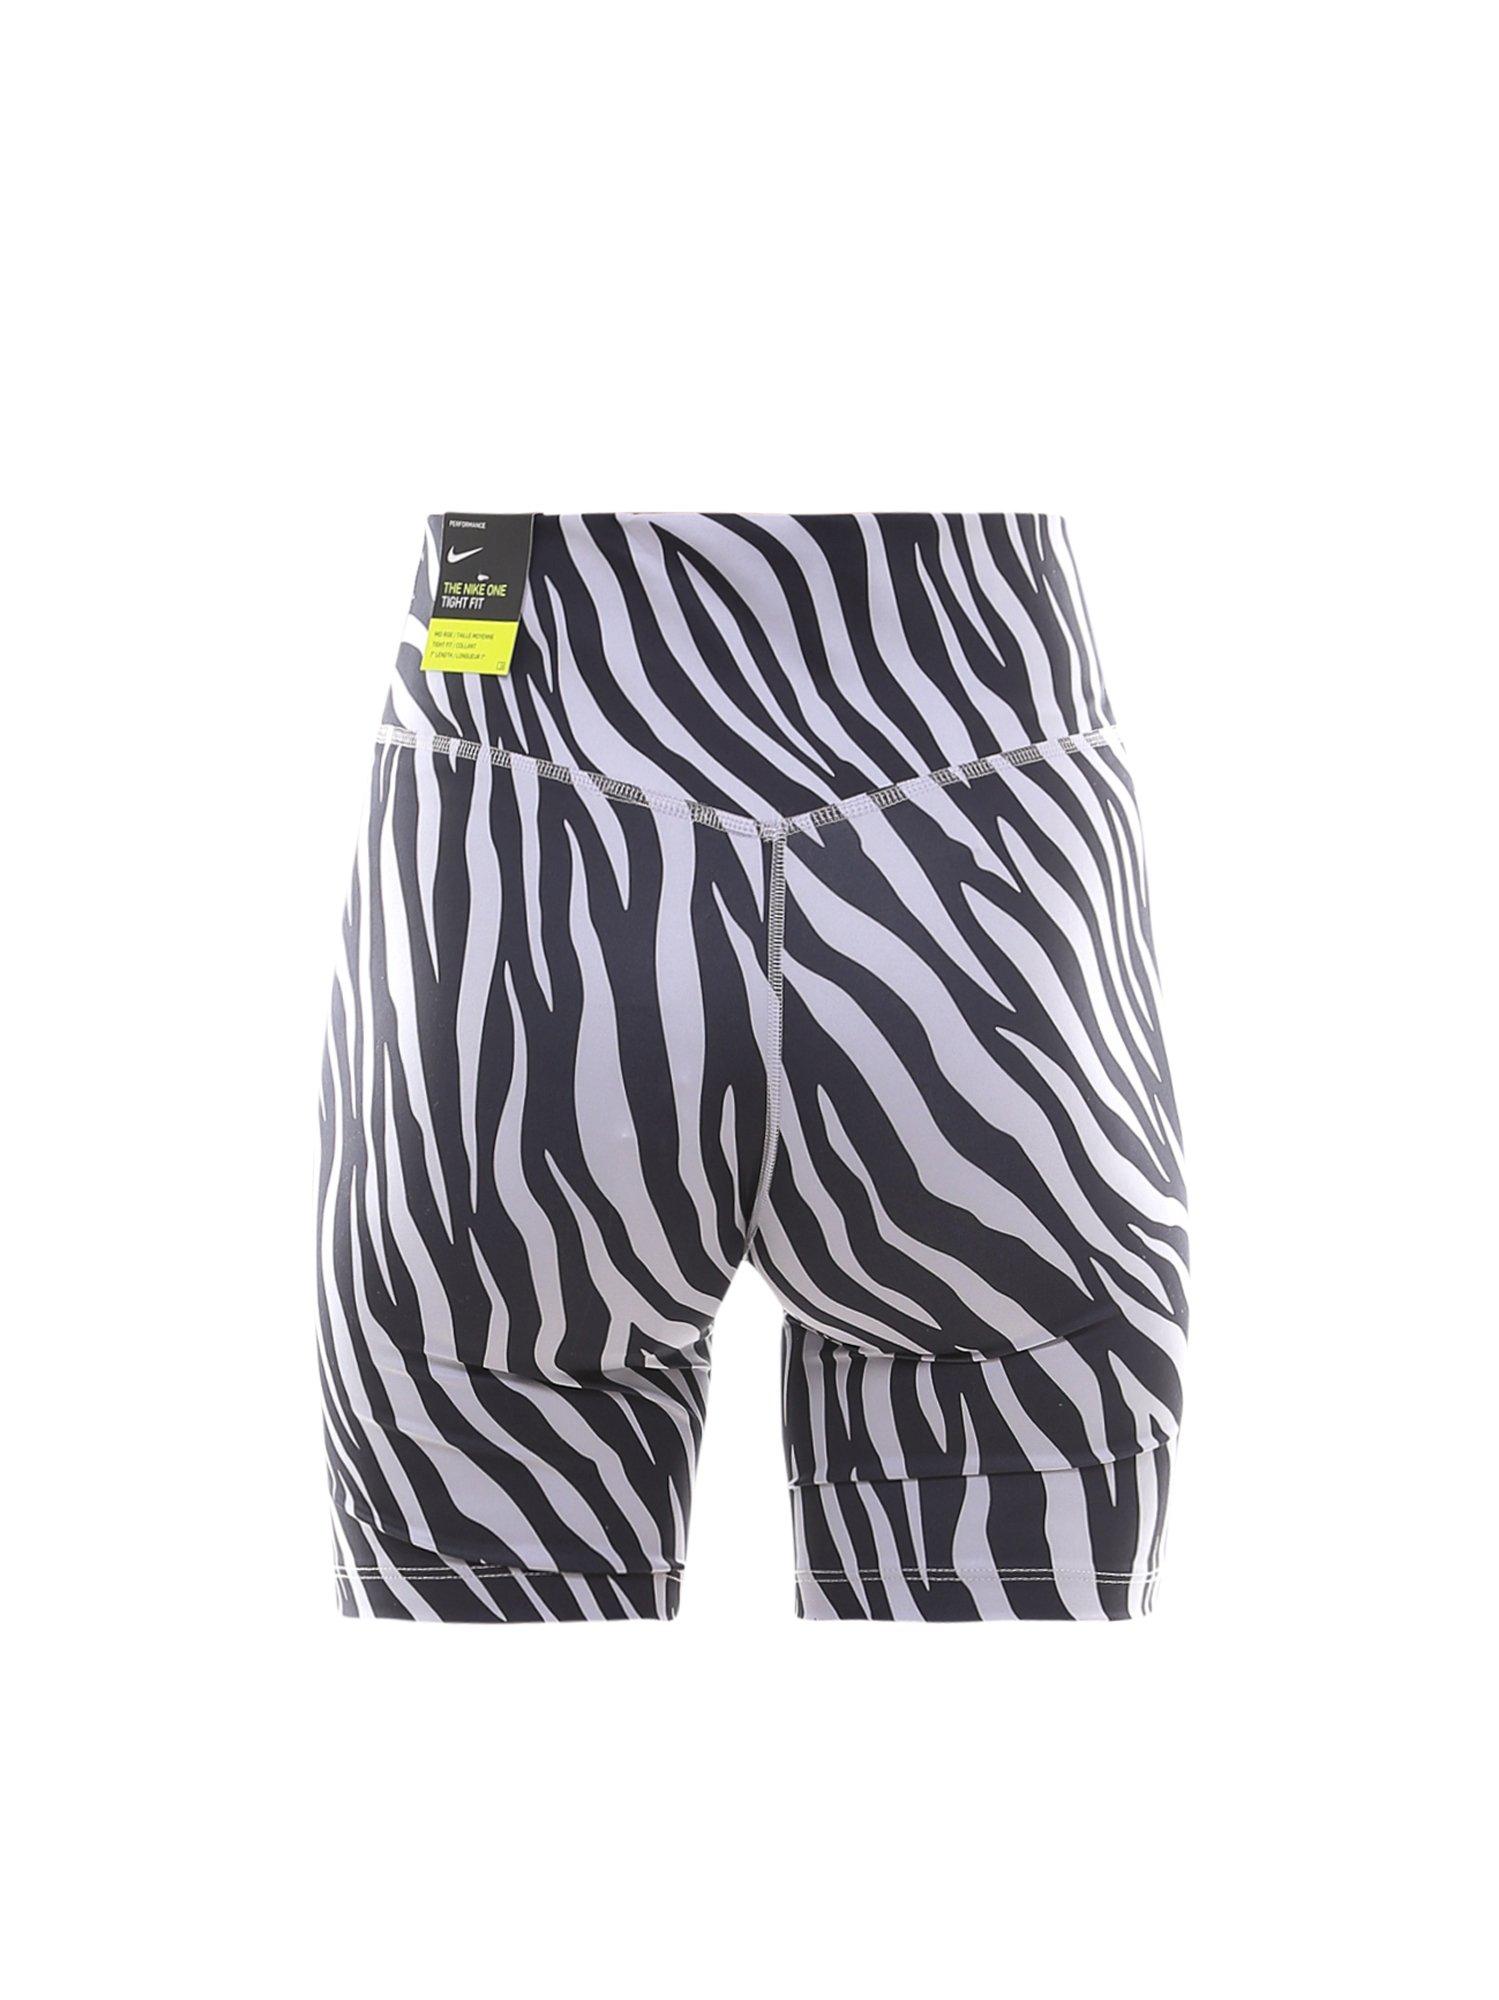 Nike Zebra Print Cycling Shorts | Lyst